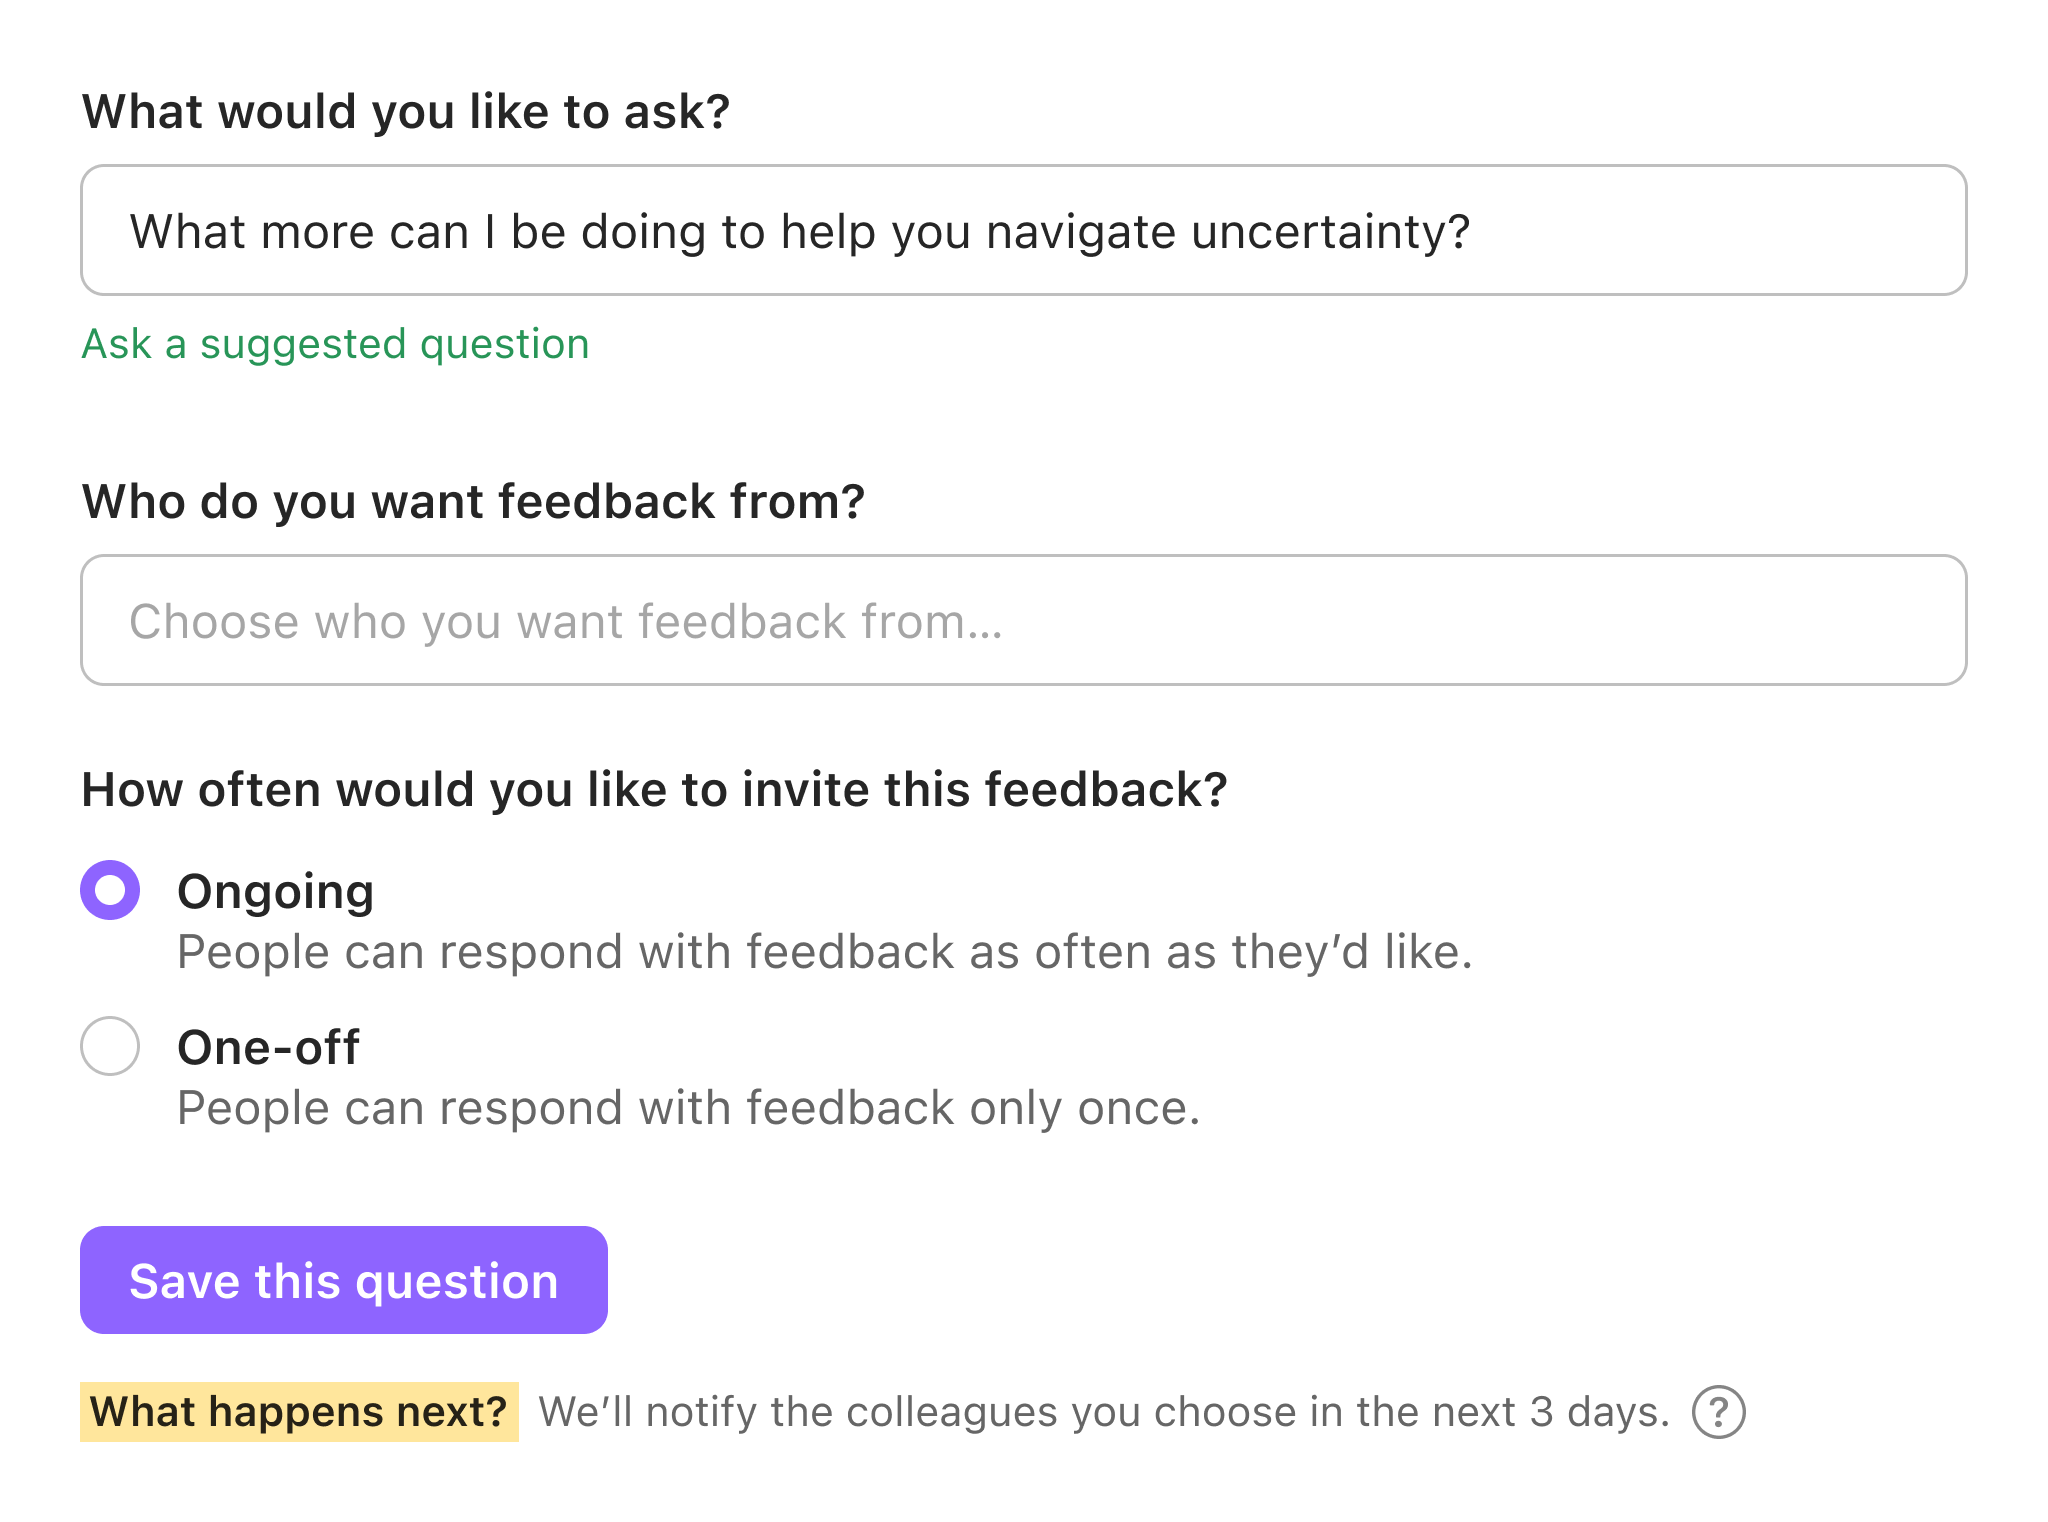 Creating a new feedback invitation